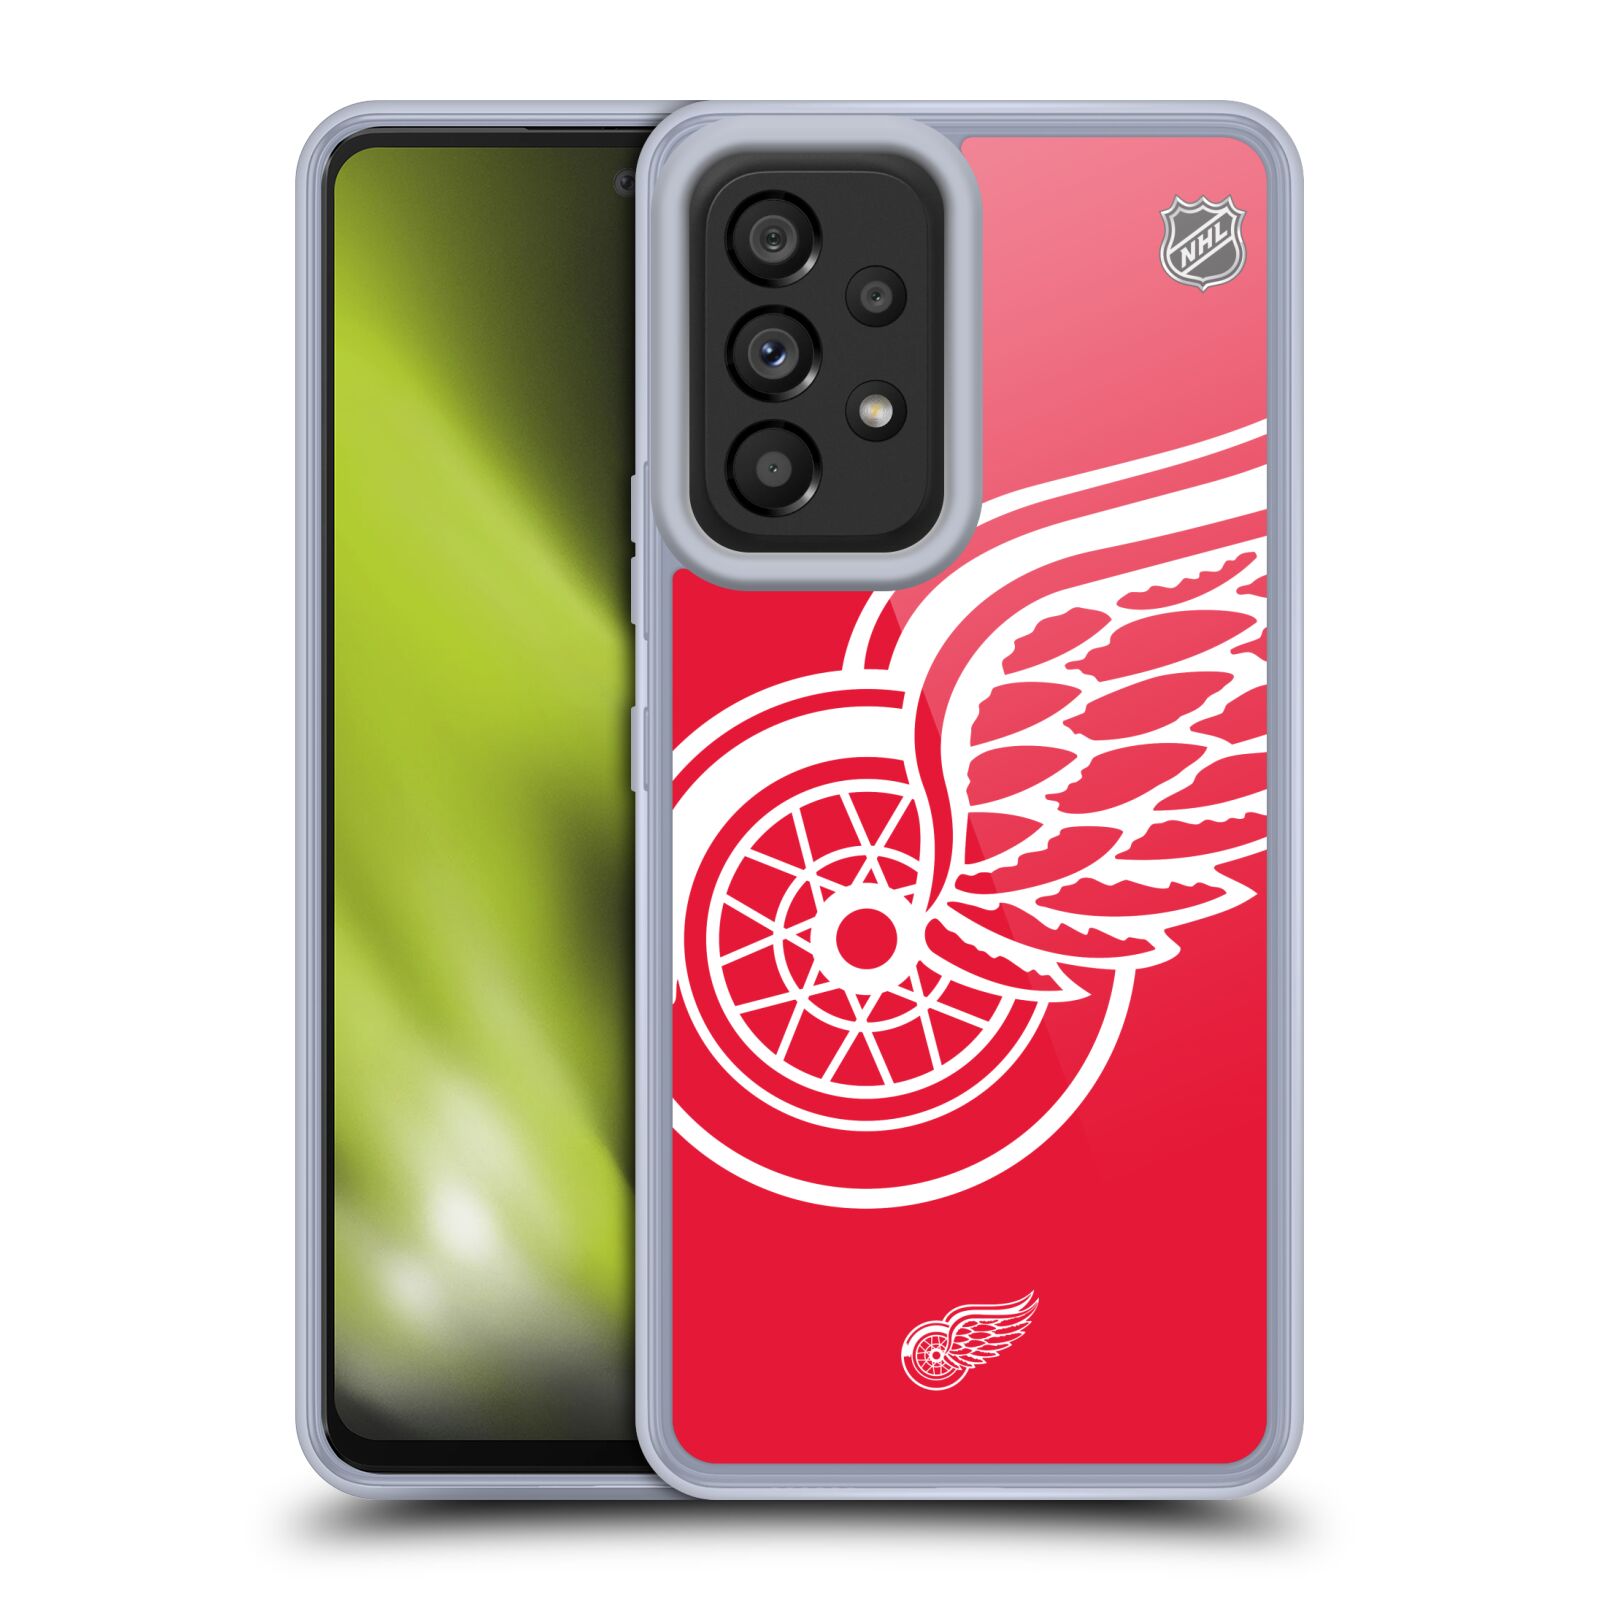 Silikonové pouzdro na mobil Samsung Galaxy A53 5G - NHL - Velké logo Detroit Red Wings (Silikonový kryt, obal, pouzdro na mobilní telefon Samsung Galaxy A53 5G s licencovaným motivem NHL - Velké logo Detroit Red Wings)